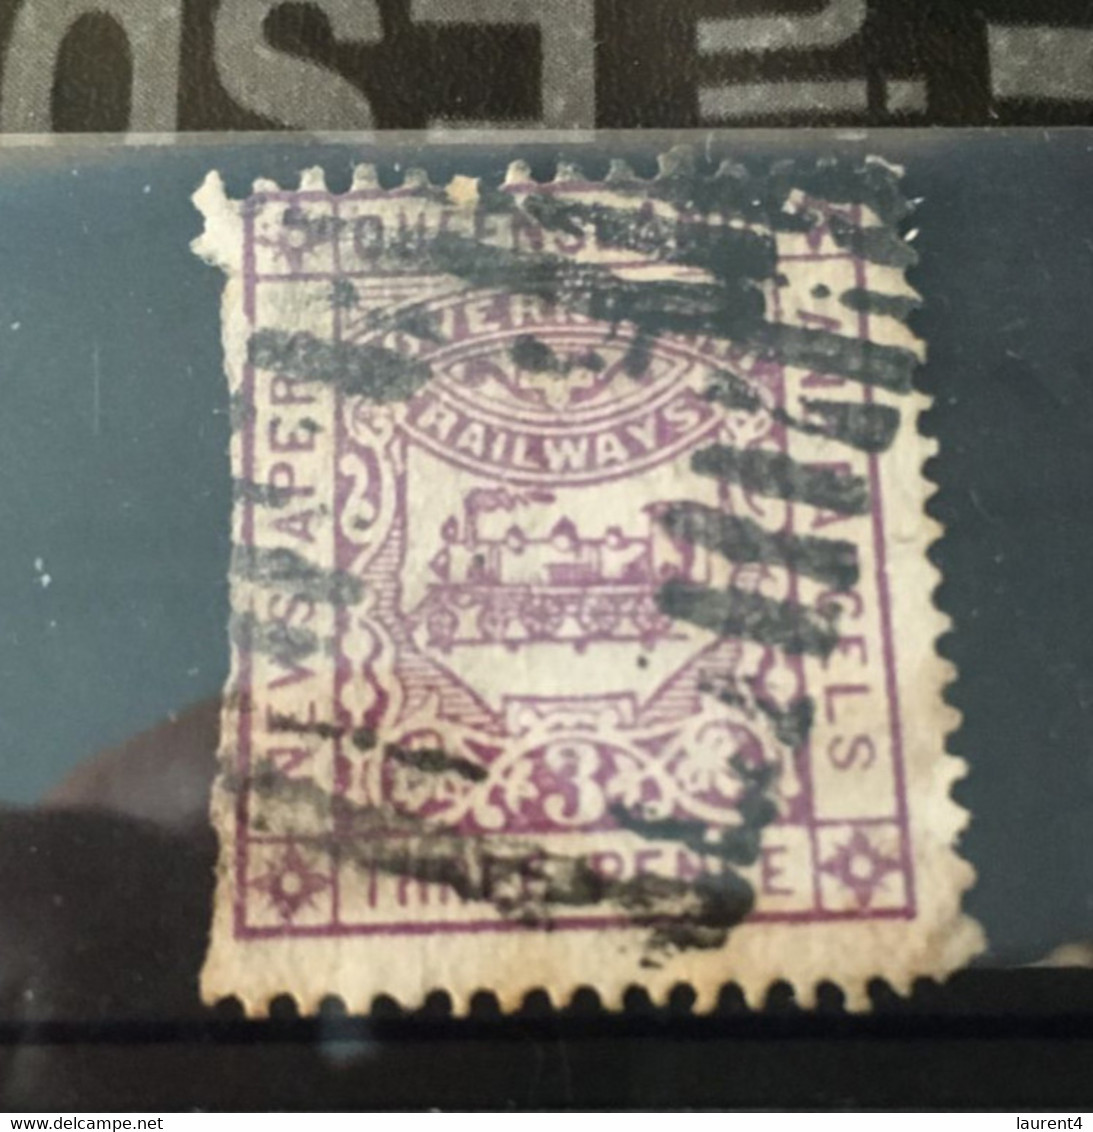 (Stamps 9-3-2021) Australia Queensland Railway (1 Stamp) - Postage Due